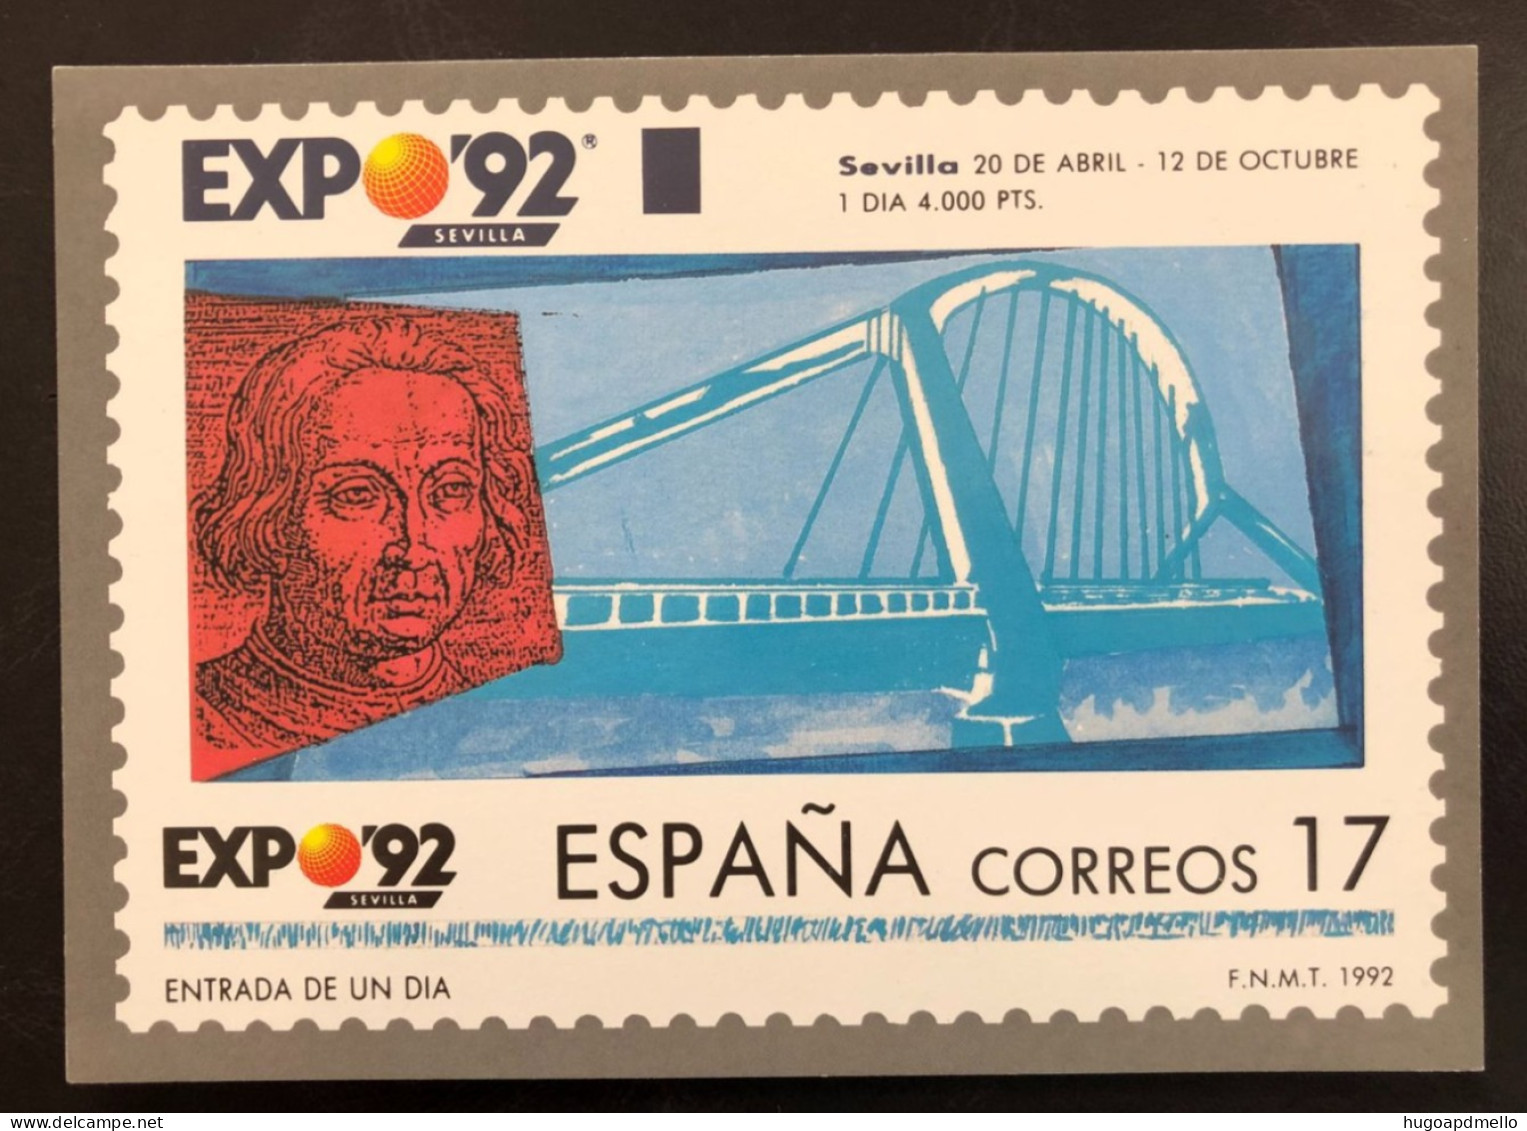 SPAIN, Uncirculated Card, « EXPO 92 Sevilla », « Entrada De Un Dia », « One Day Ticket », 1992 - Tarjetas Máxima